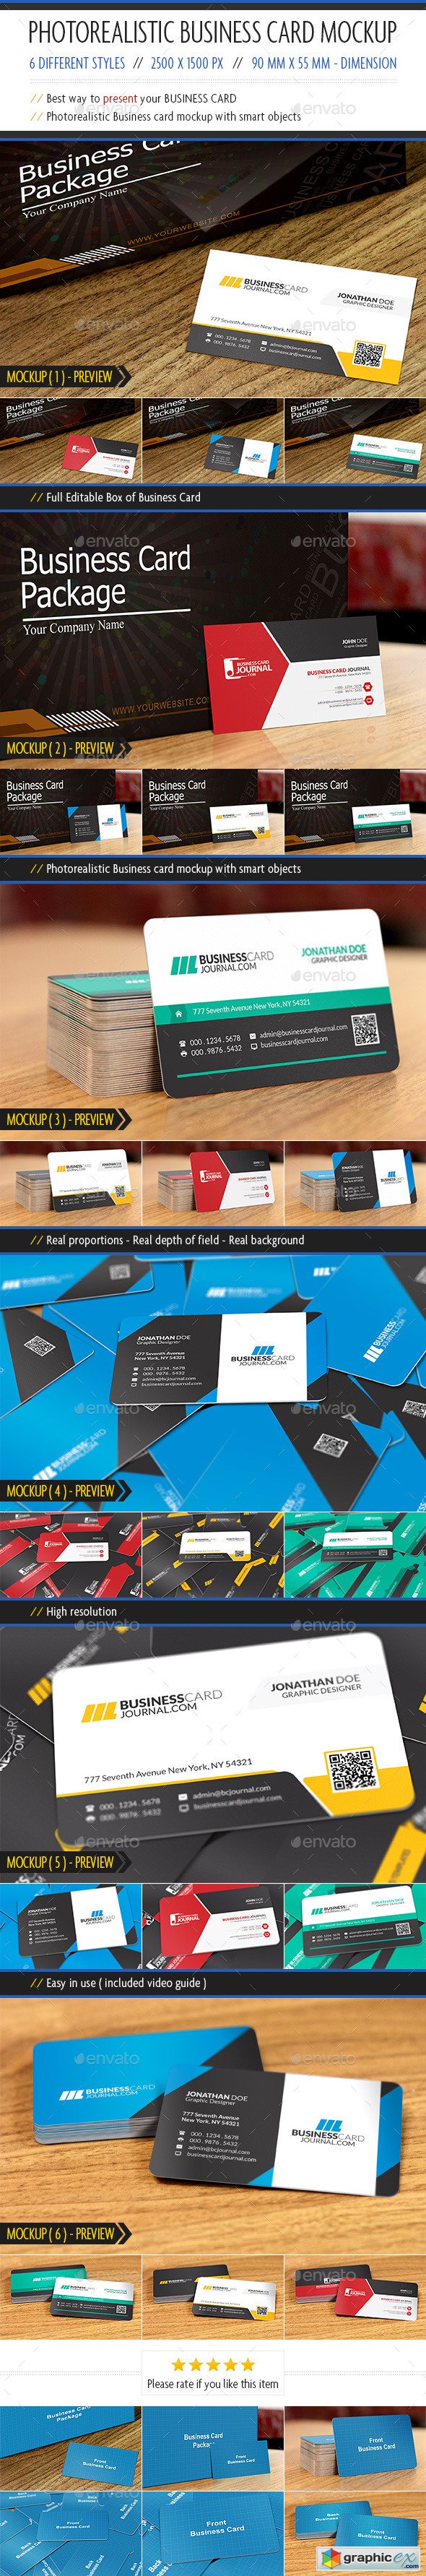  Photorealistic Business Card Mockup